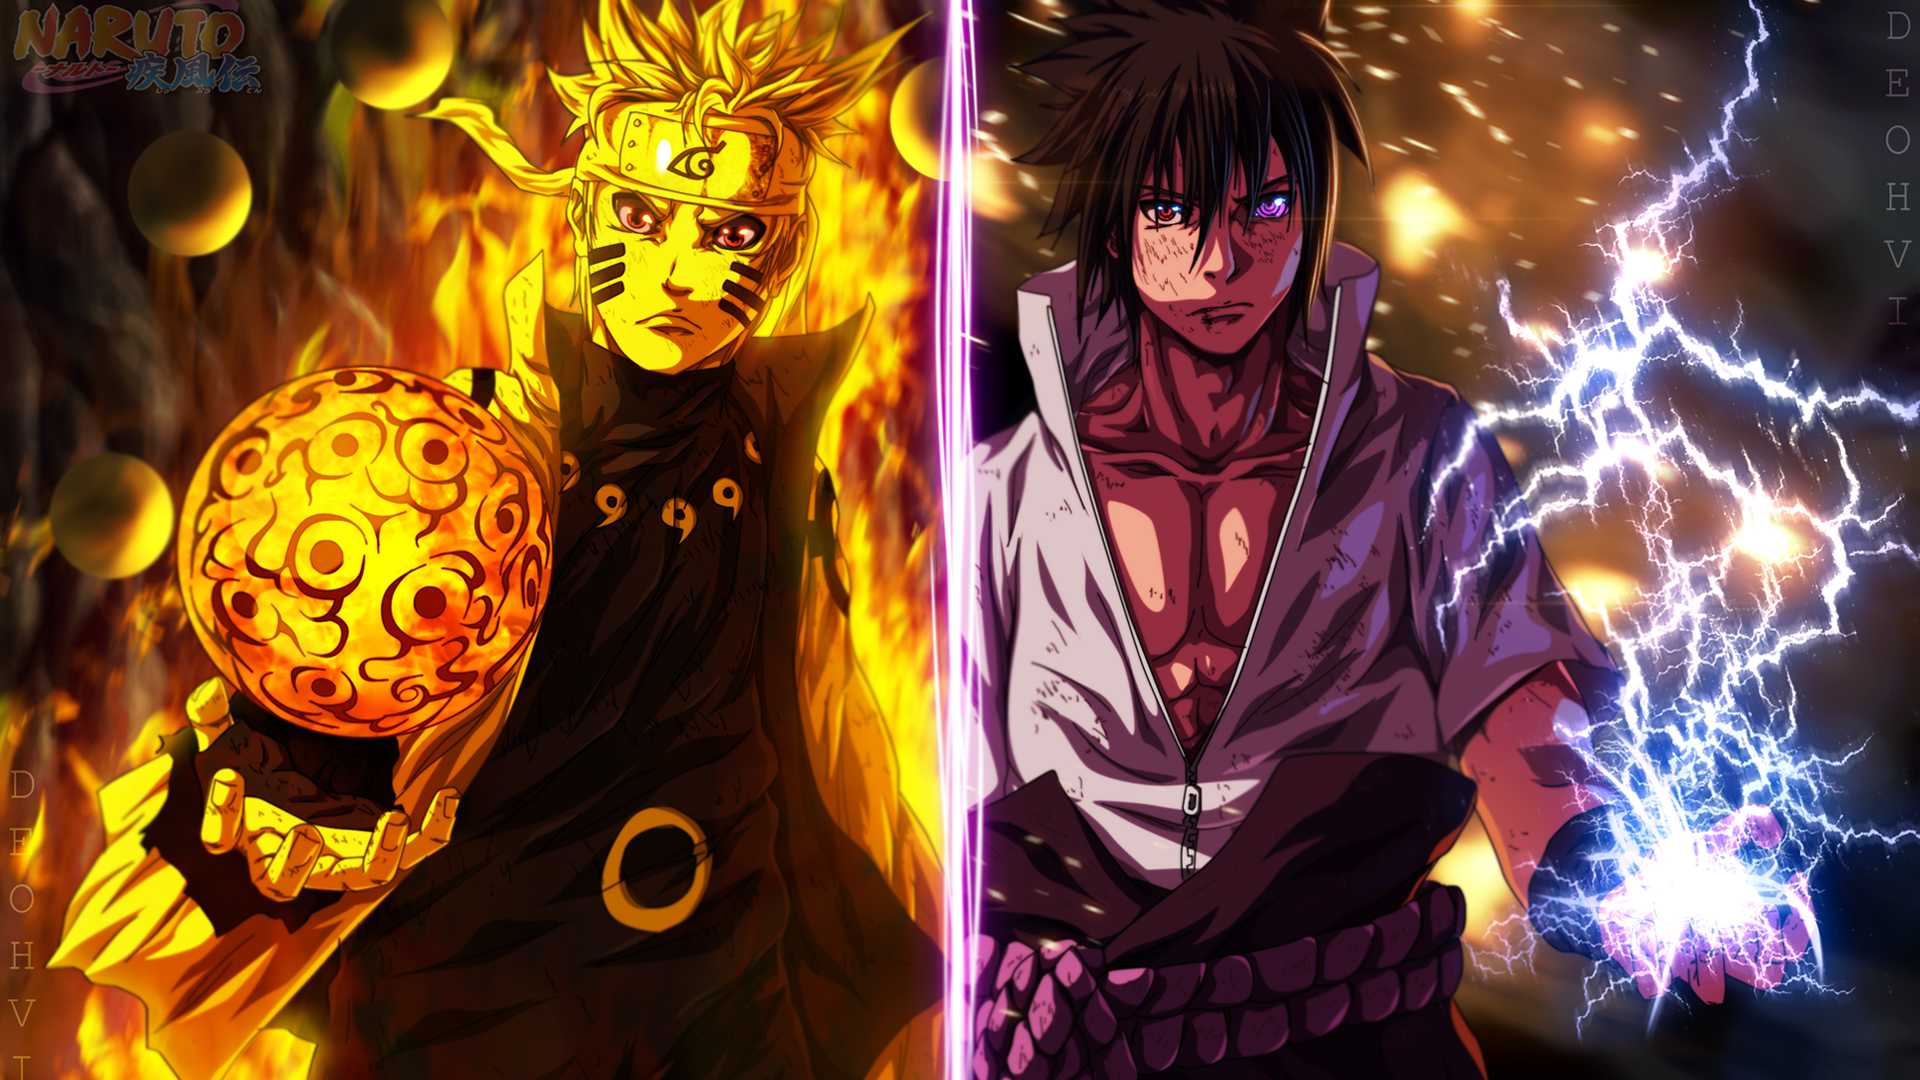 Naruto Vs Sasuke Wallpaper For Mobile Phones Full HD Pics